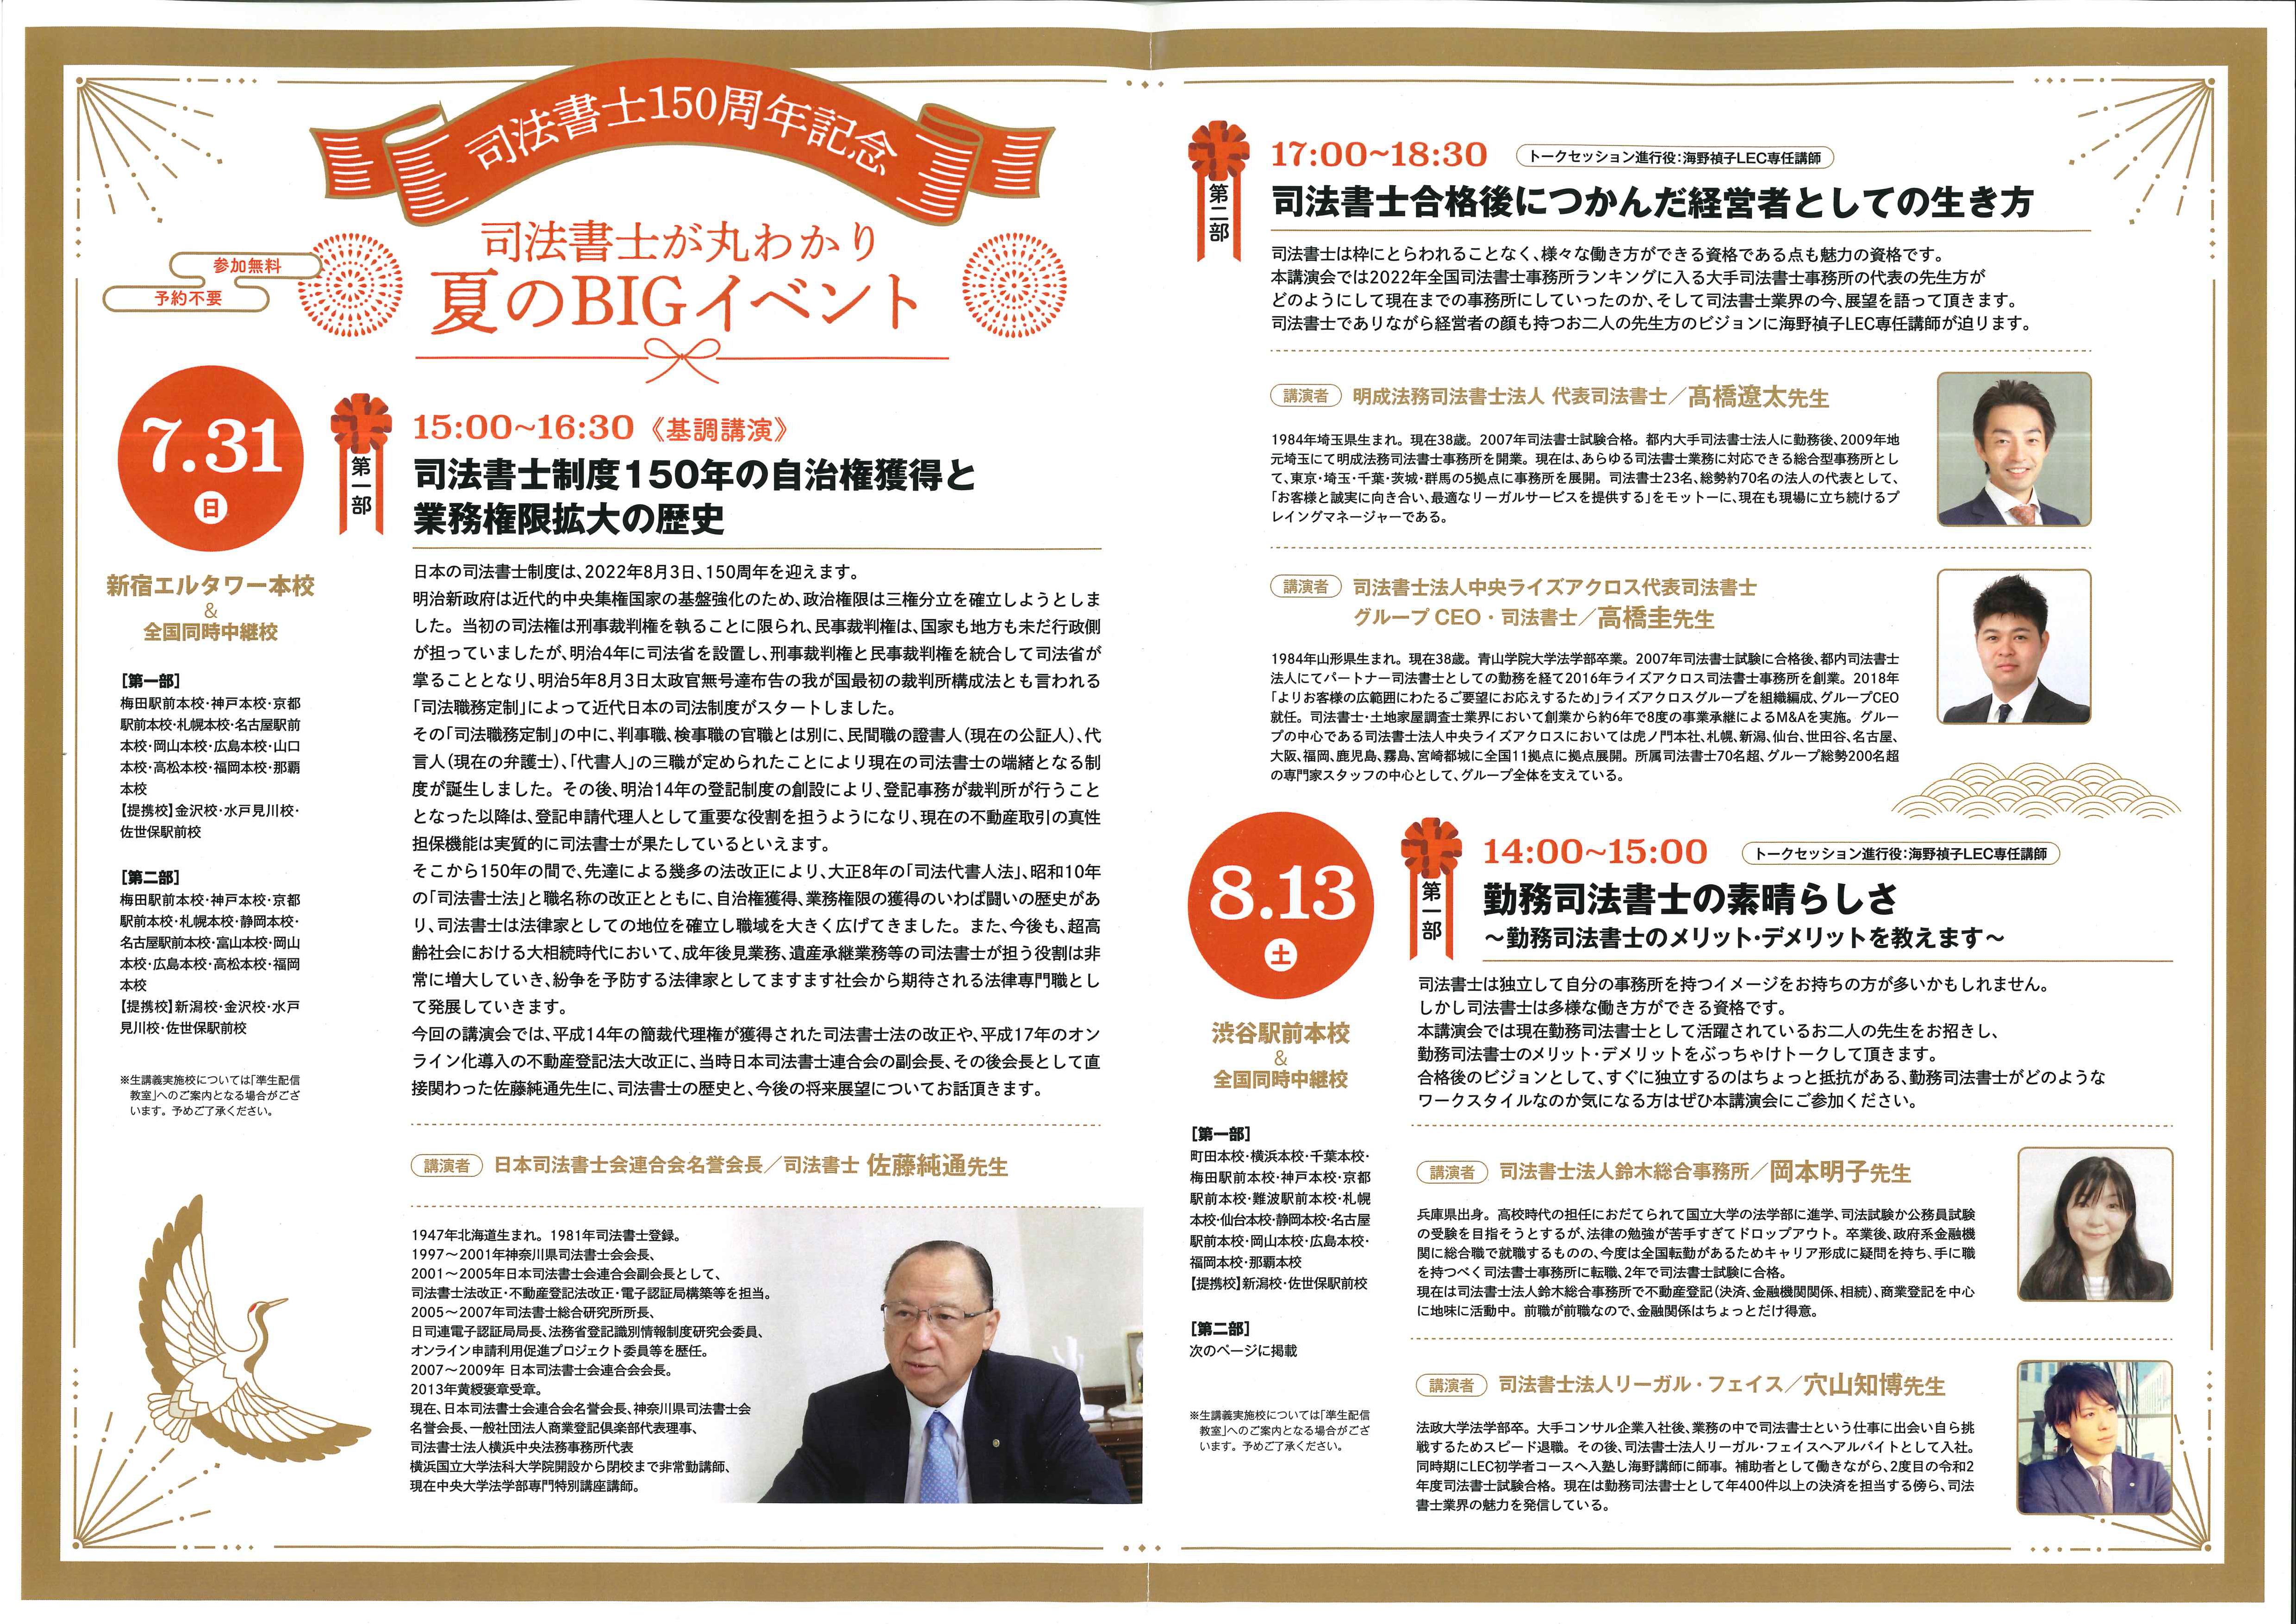 LEC東京リーガルマインド主催の司法書士１５０周年記念イベントにて弊社代表髙橋が登壇しました。